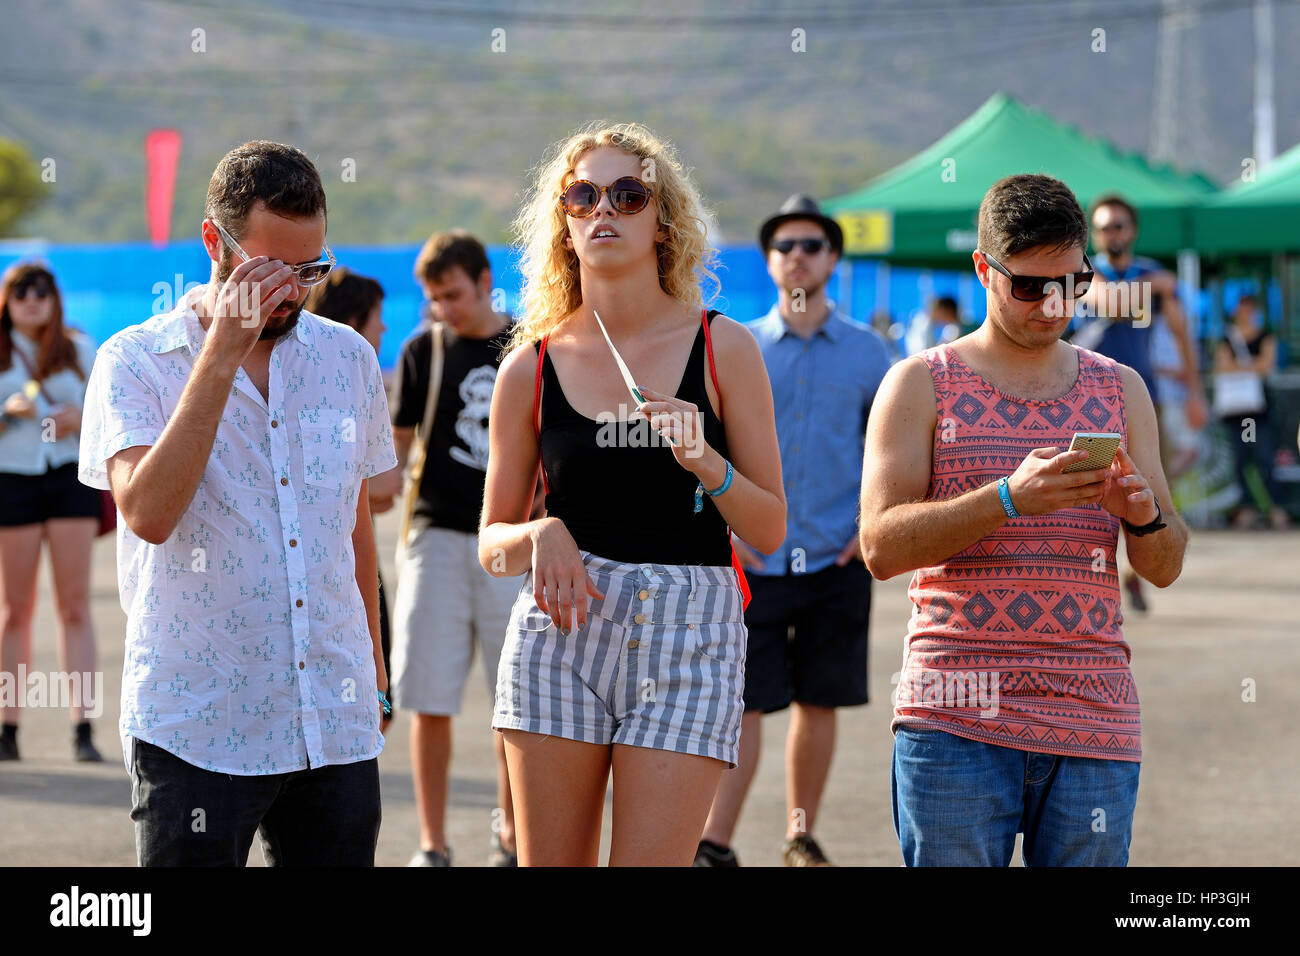 BENICASSIM, SPAIN - JULY 18: People at FIB Festival on July 18, 2014 in Benicassim, Spain. Stock Photo